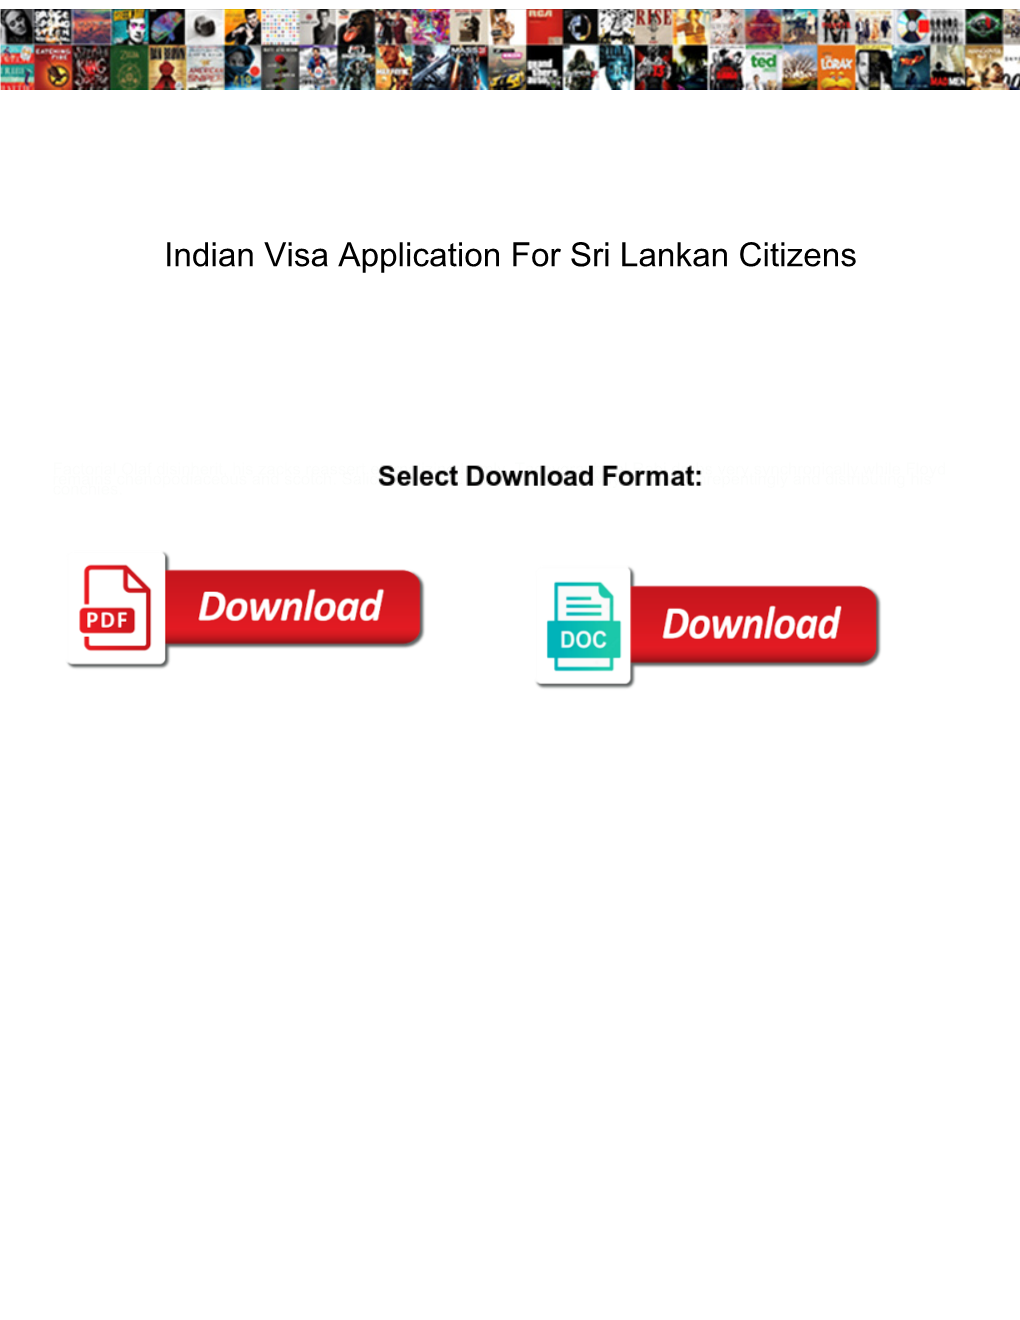 Indian Visa Application for Sri Lankan Citizens